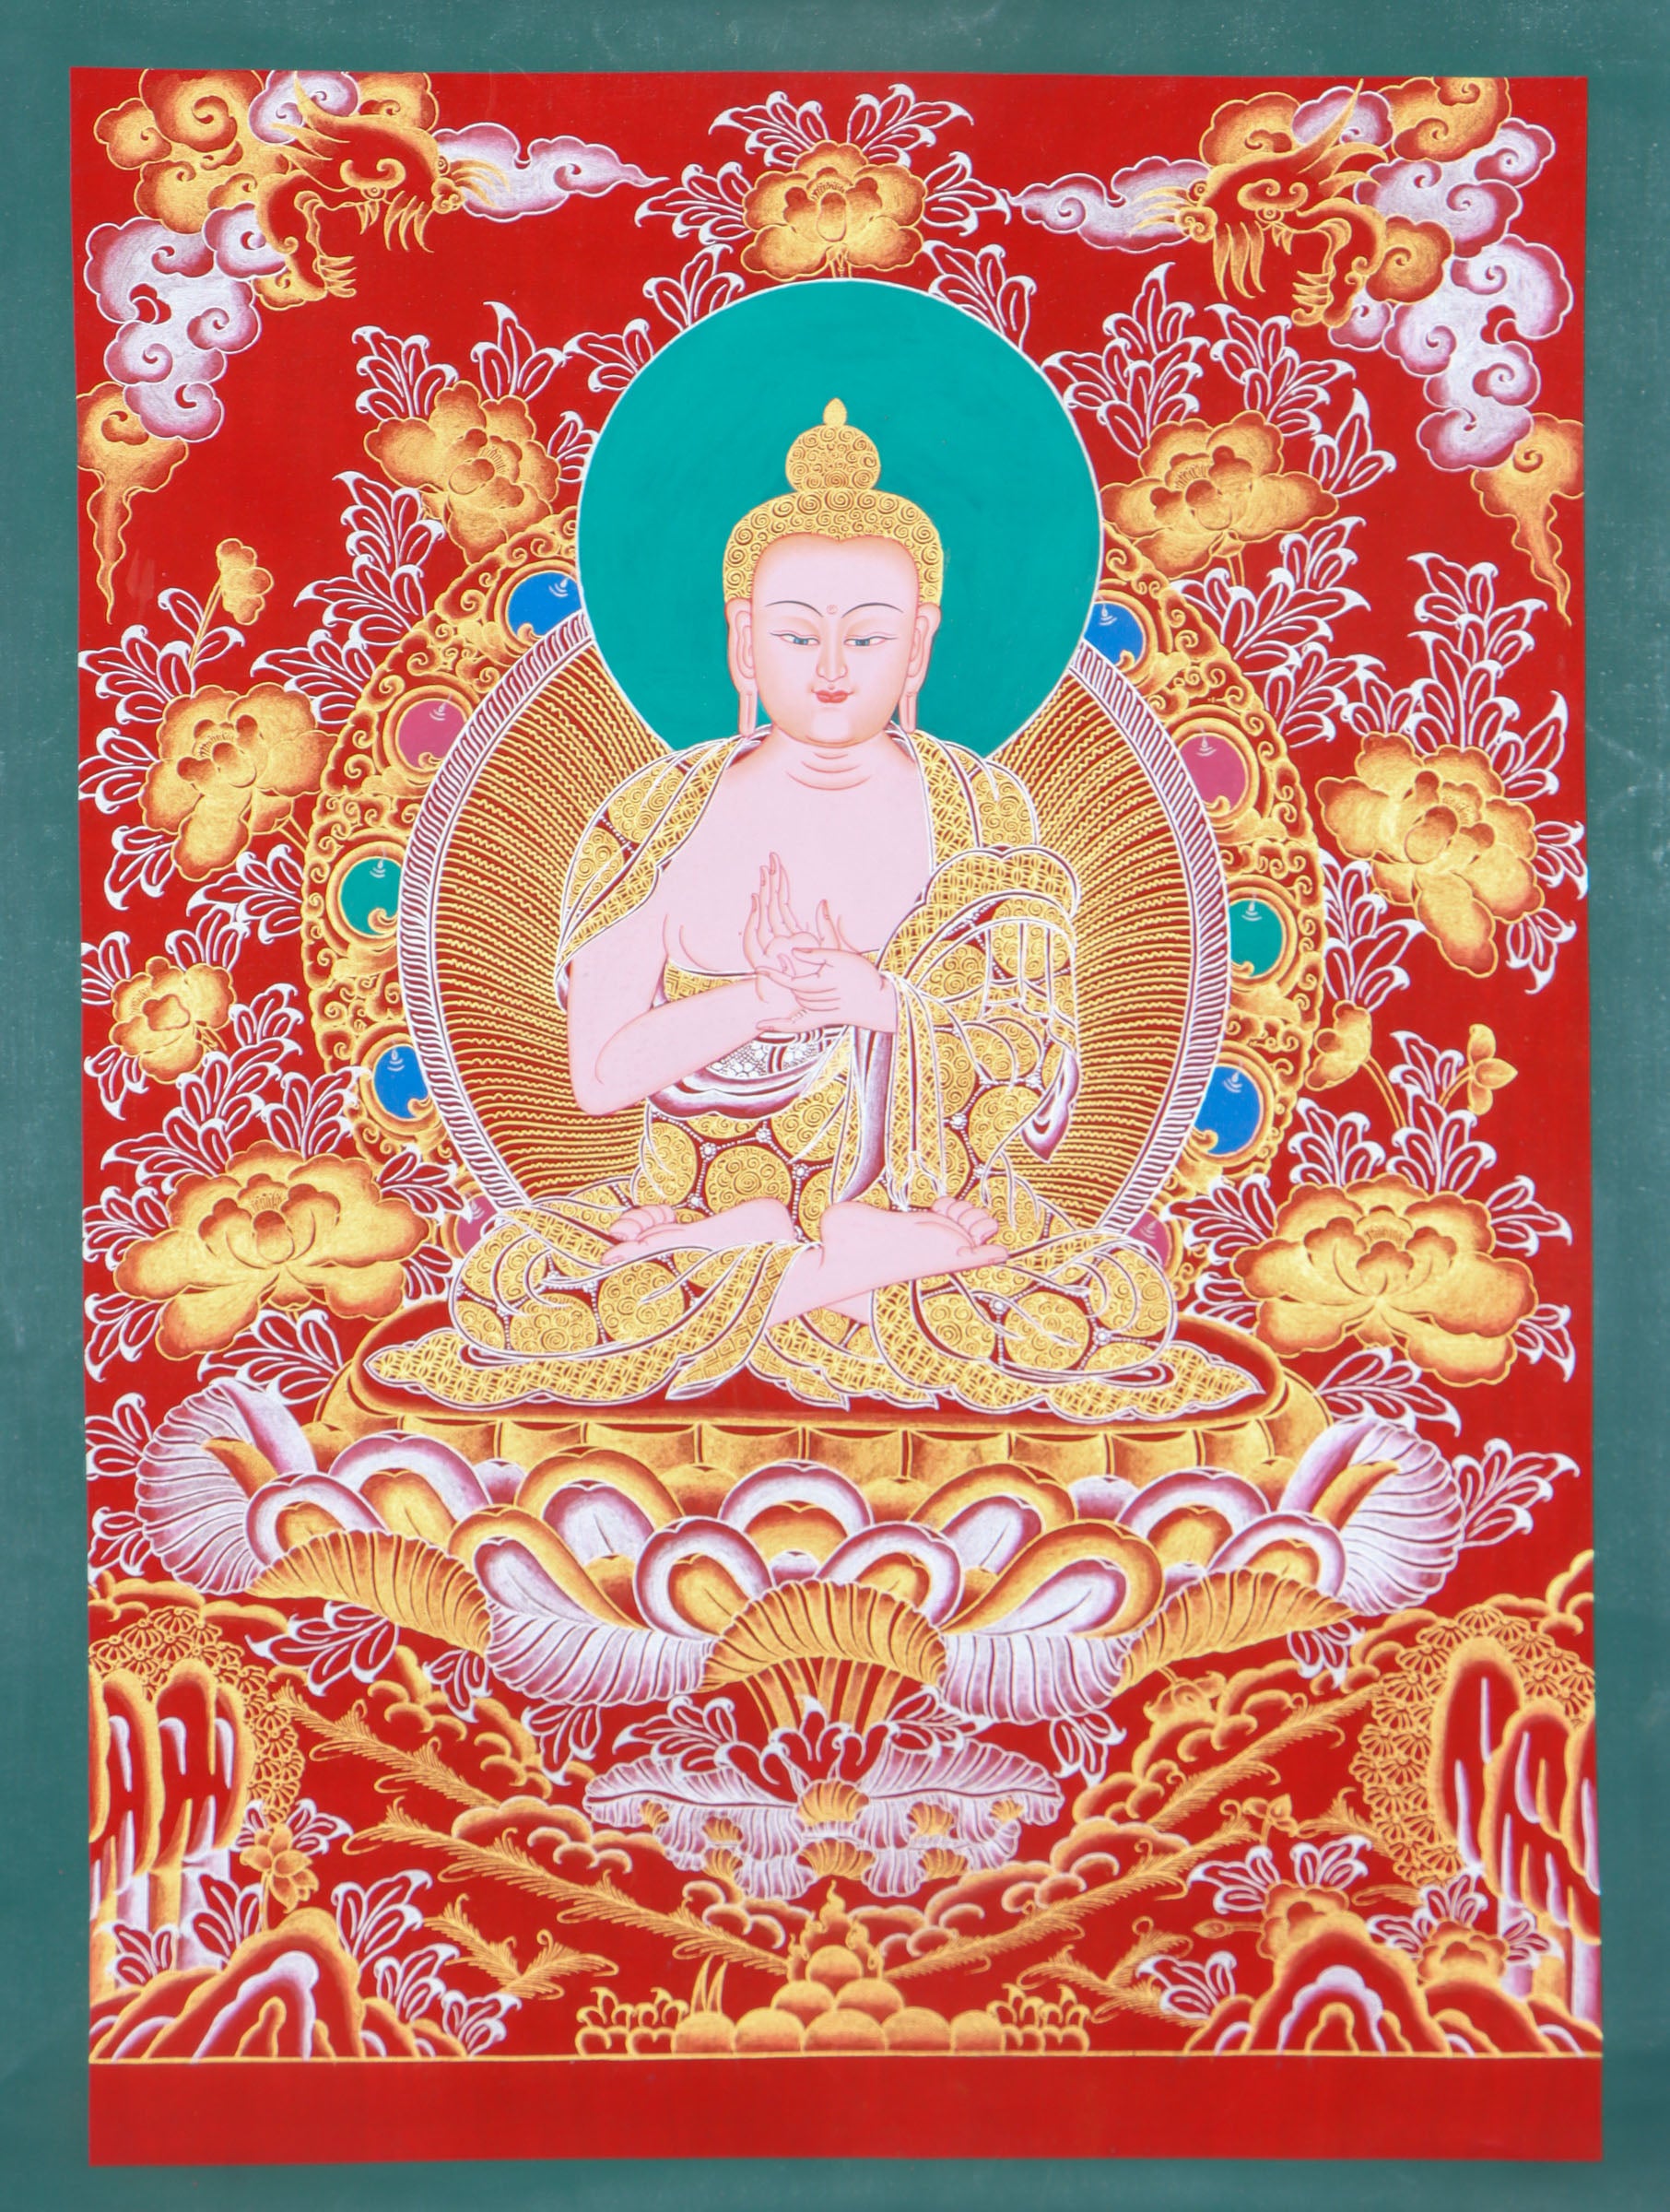 Vairochana Buddha Thangka Painting for wall hanging decor.